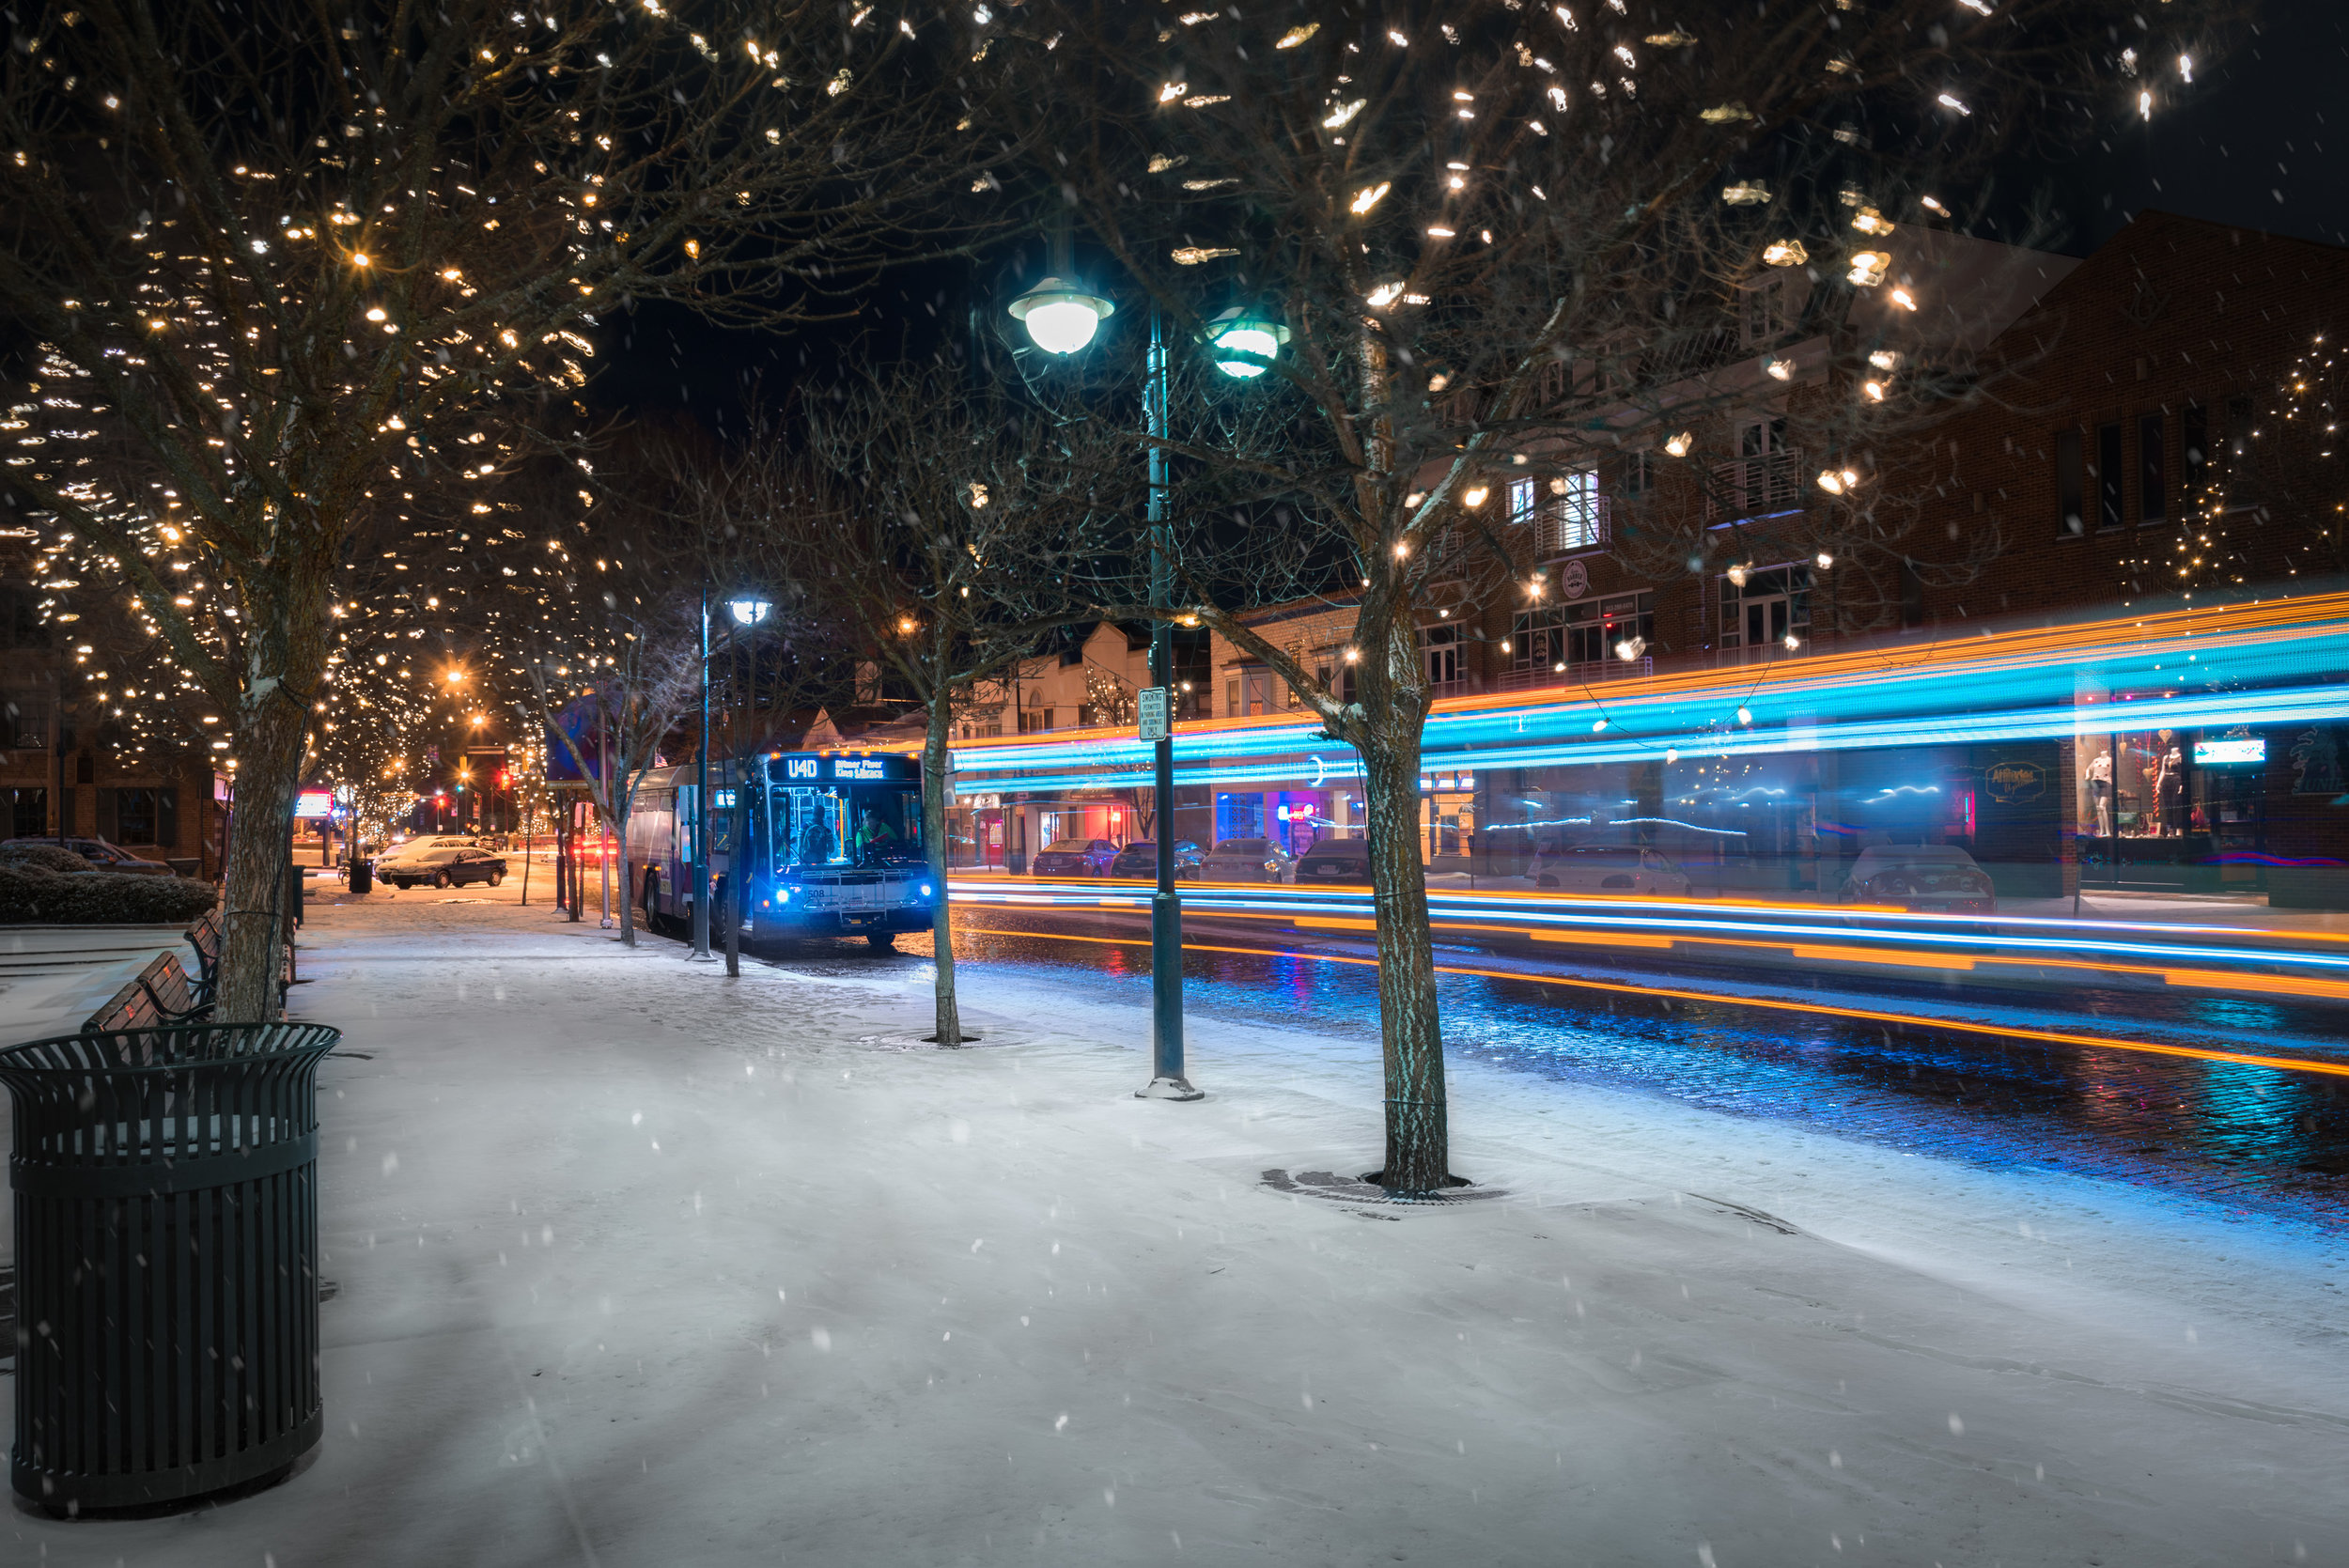 Uptown Oxford Ohio snow winter photo by Ron Hautau.jpg